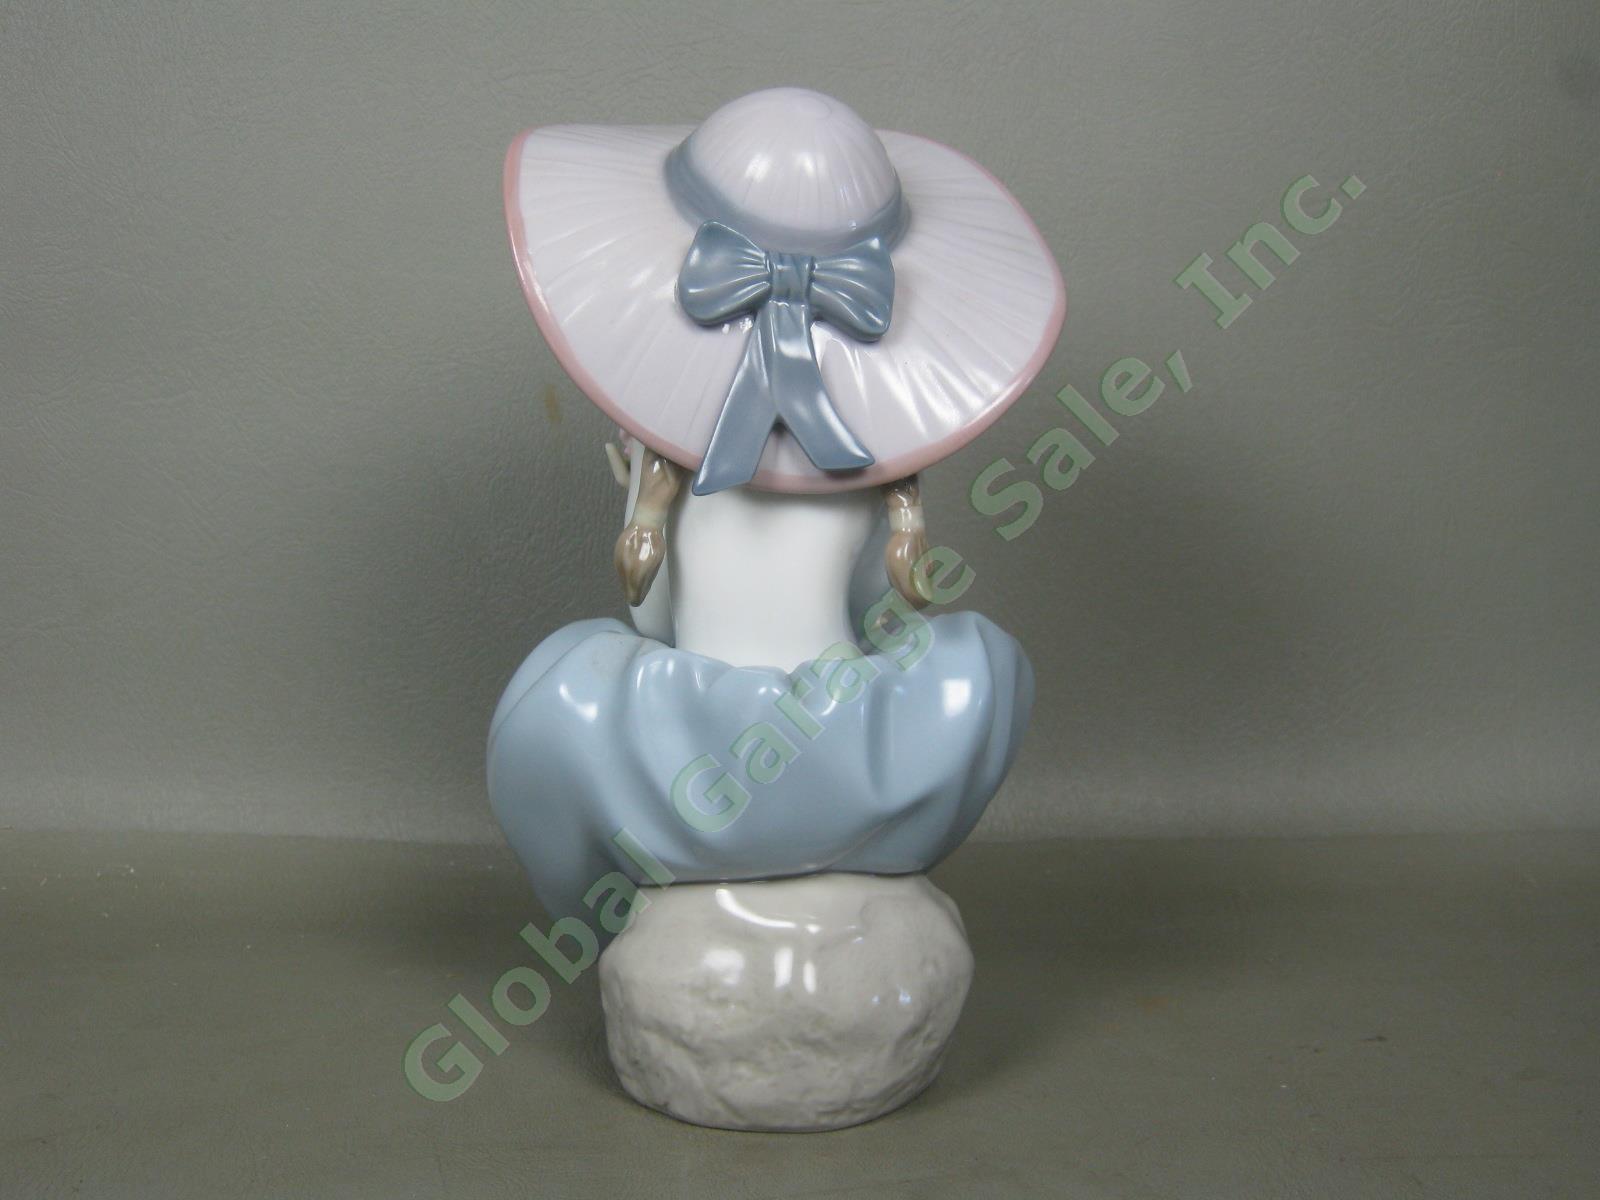 Vtg 1990 Lladro Figurine Fragrant Bouquet #5862 Girl w/ Flowers Mint In Box! NR! 5